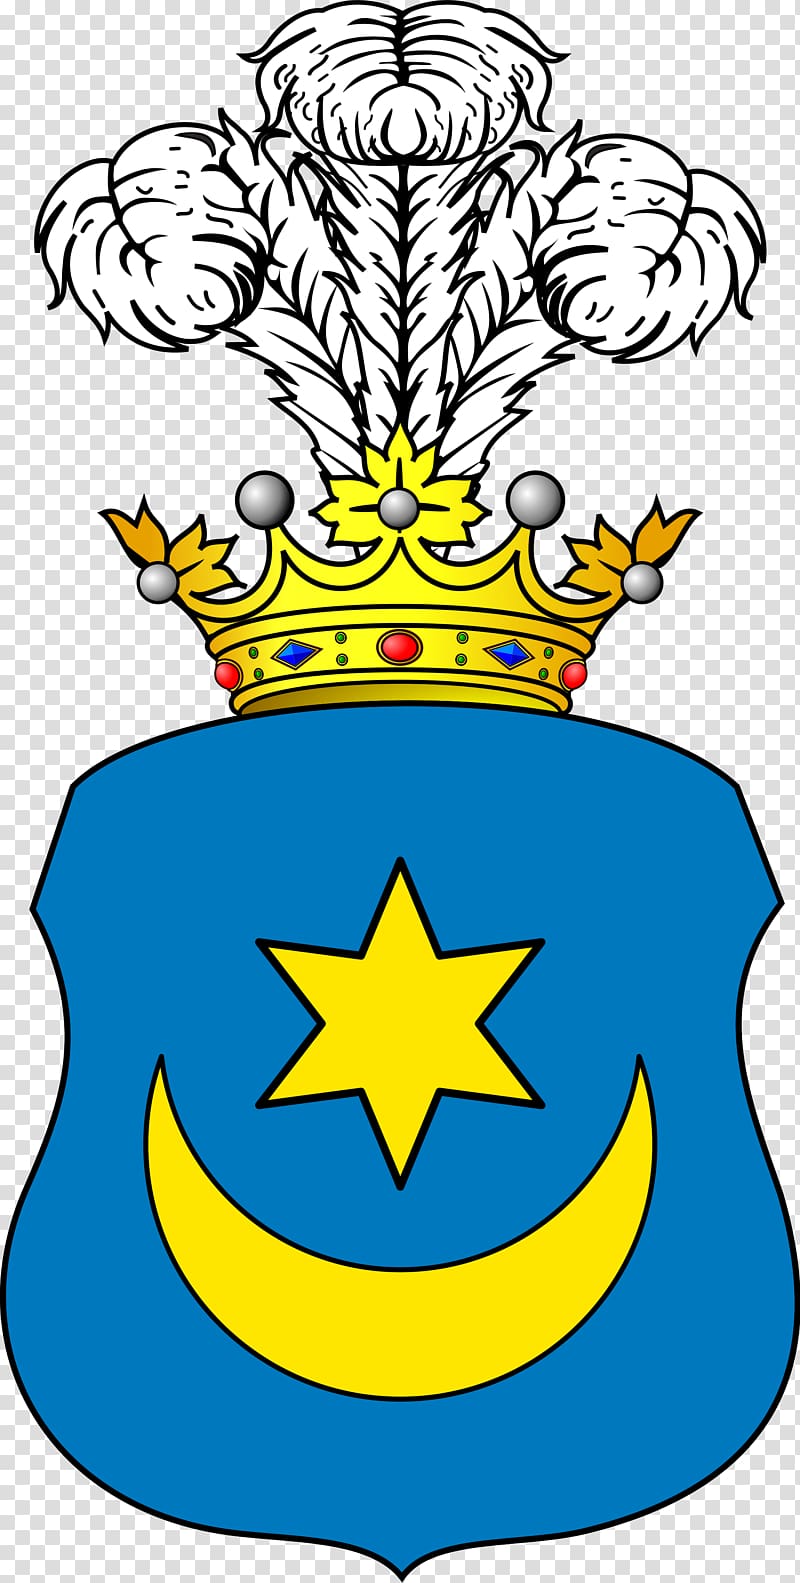 Leliwa coat of arms Poland Herb szlachecki Polish heraldry, family transparent background PNG clipart